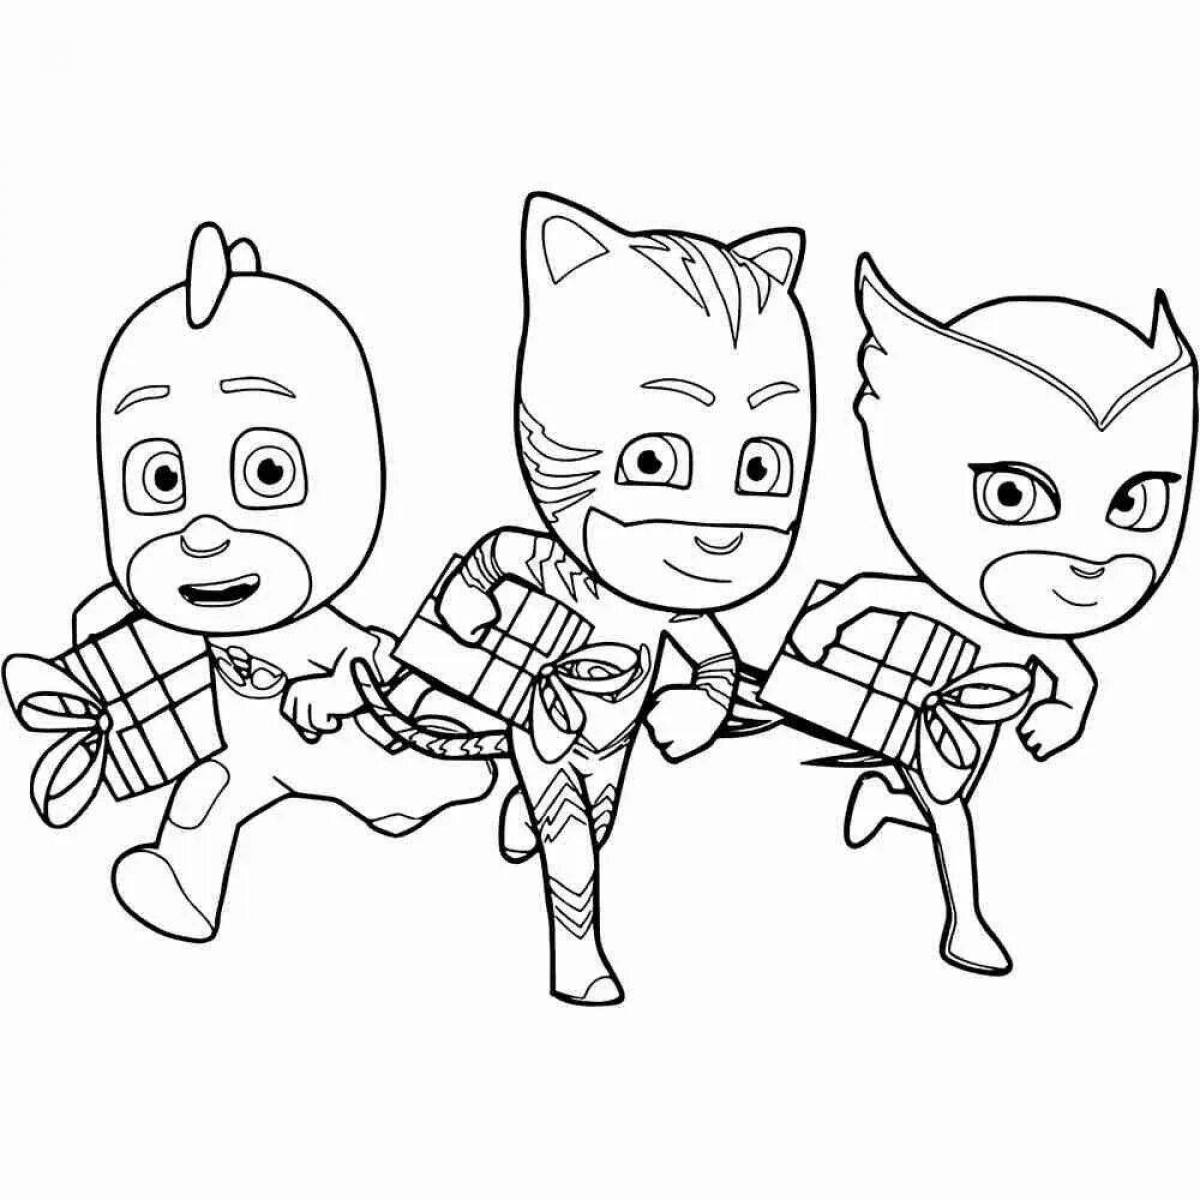 3 superhero cat dazzling coloring book